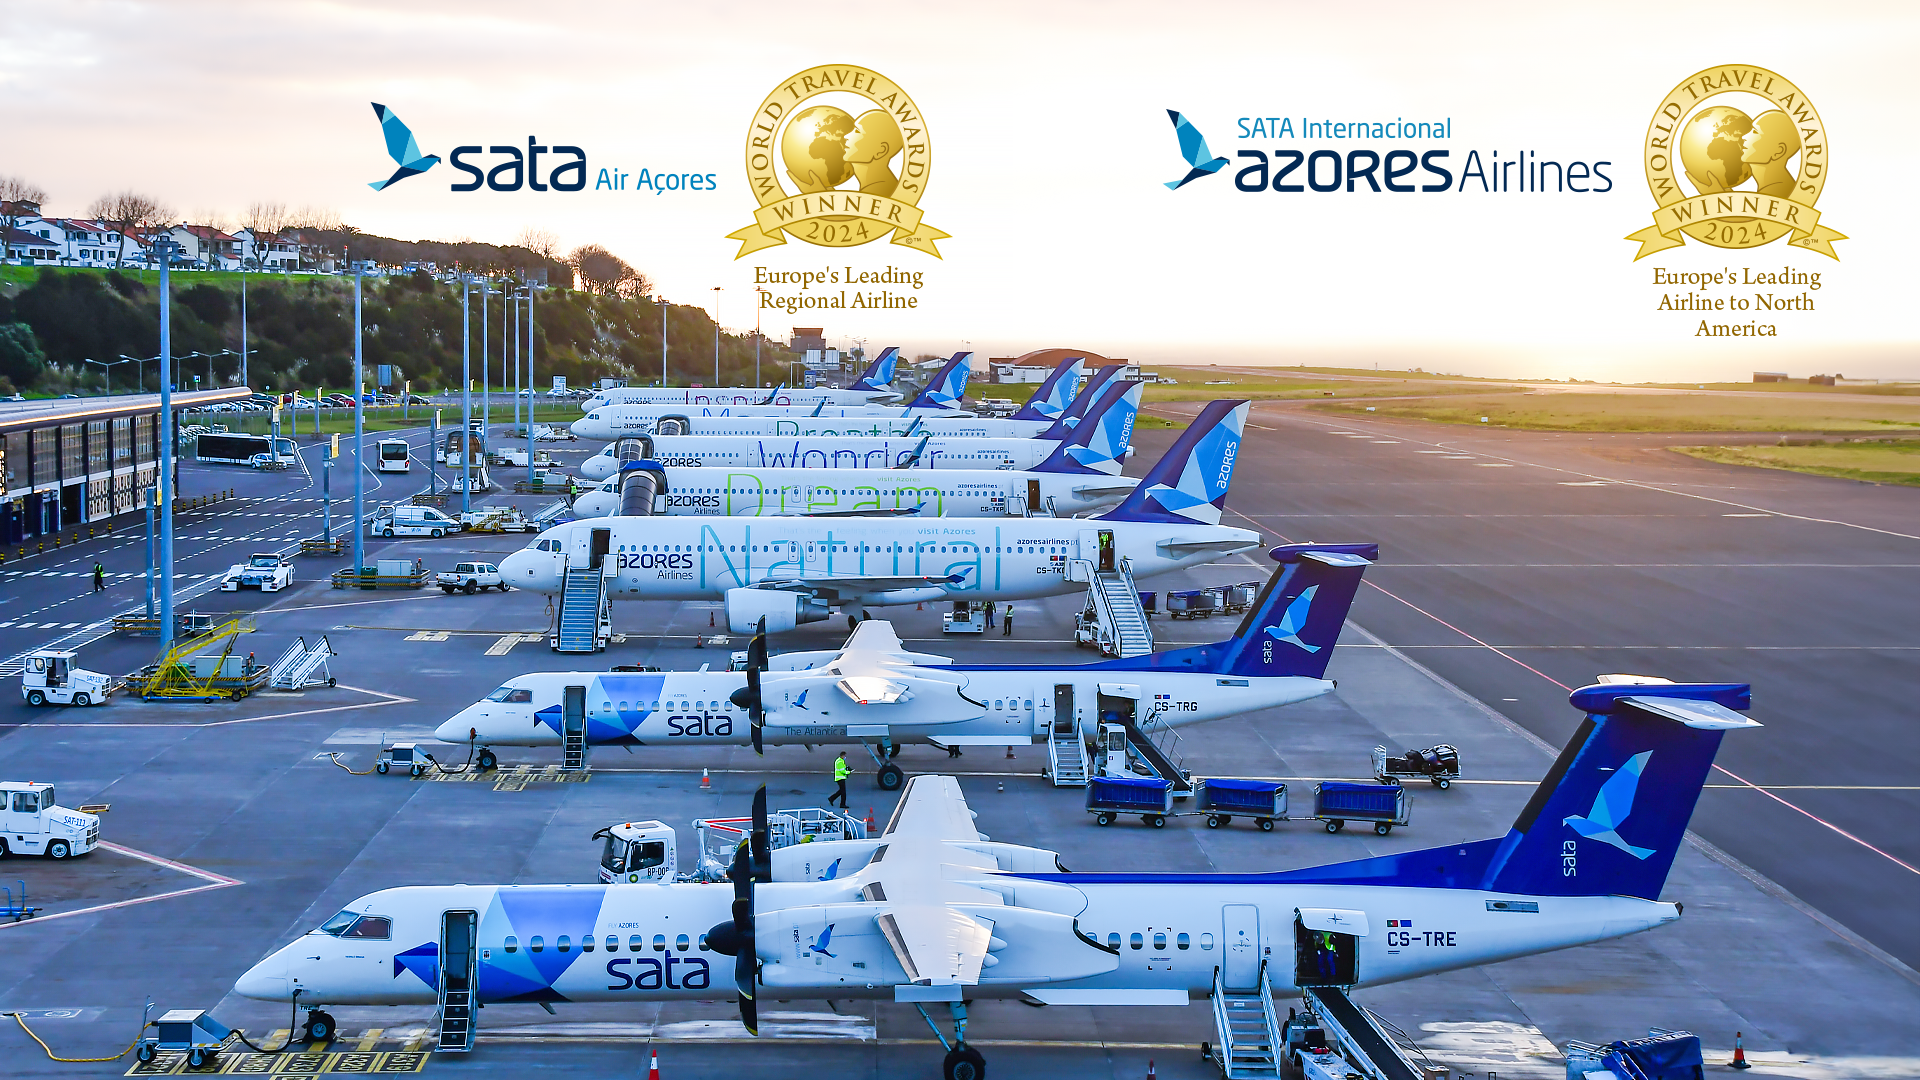 SATA Air Açores, World Travel Awards Winner 2024, Europe's Regional Leading Regional Airline. SATA Internacional Azores Airlines, World Travel Awards Winner 2024, Europe's Airline to North America.